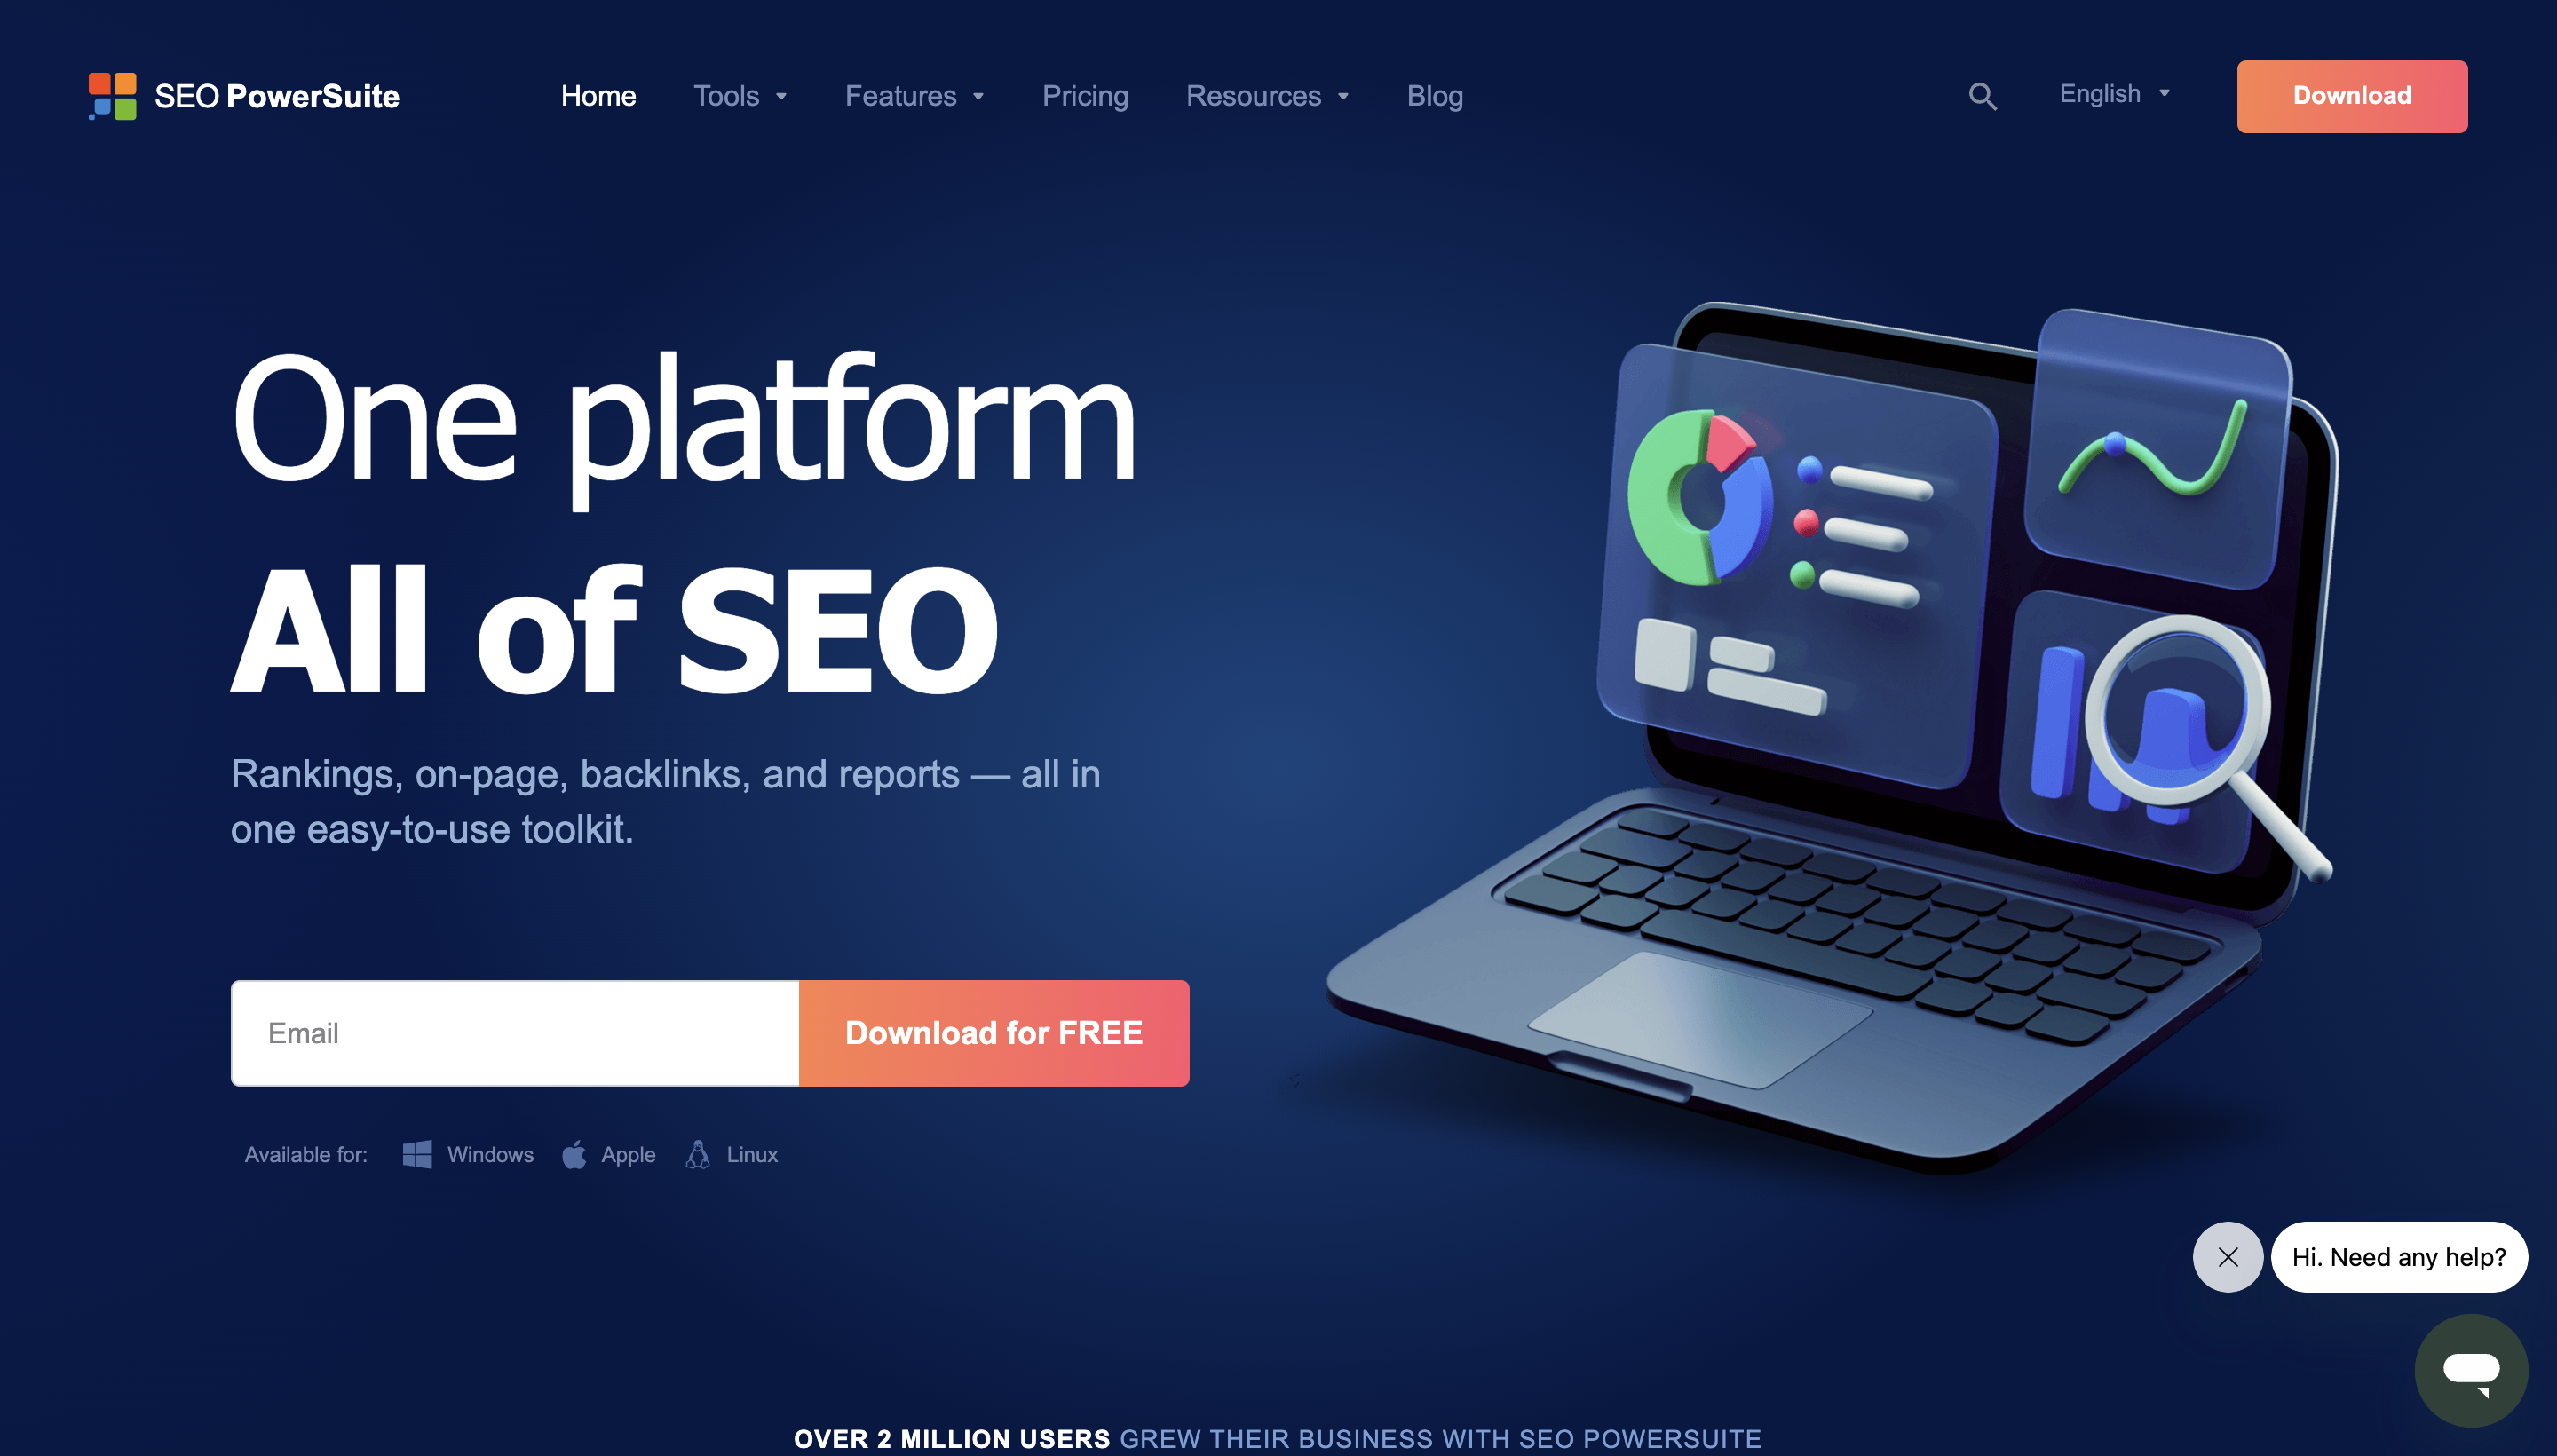 SEO PowerSuite Home Page